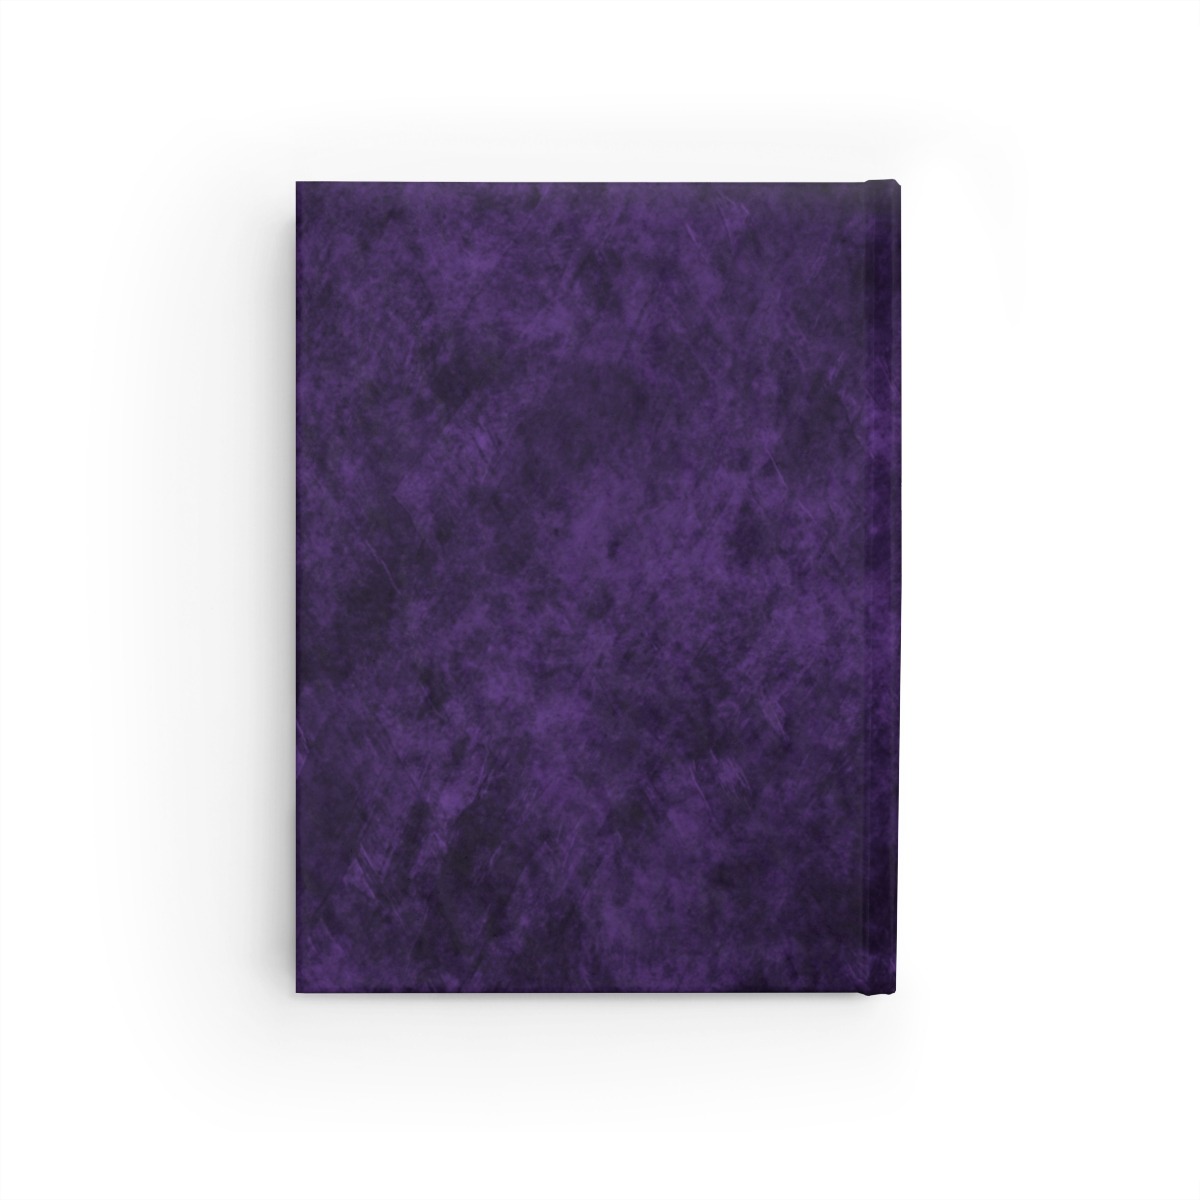 Purple Celtic Dragonfly Journal